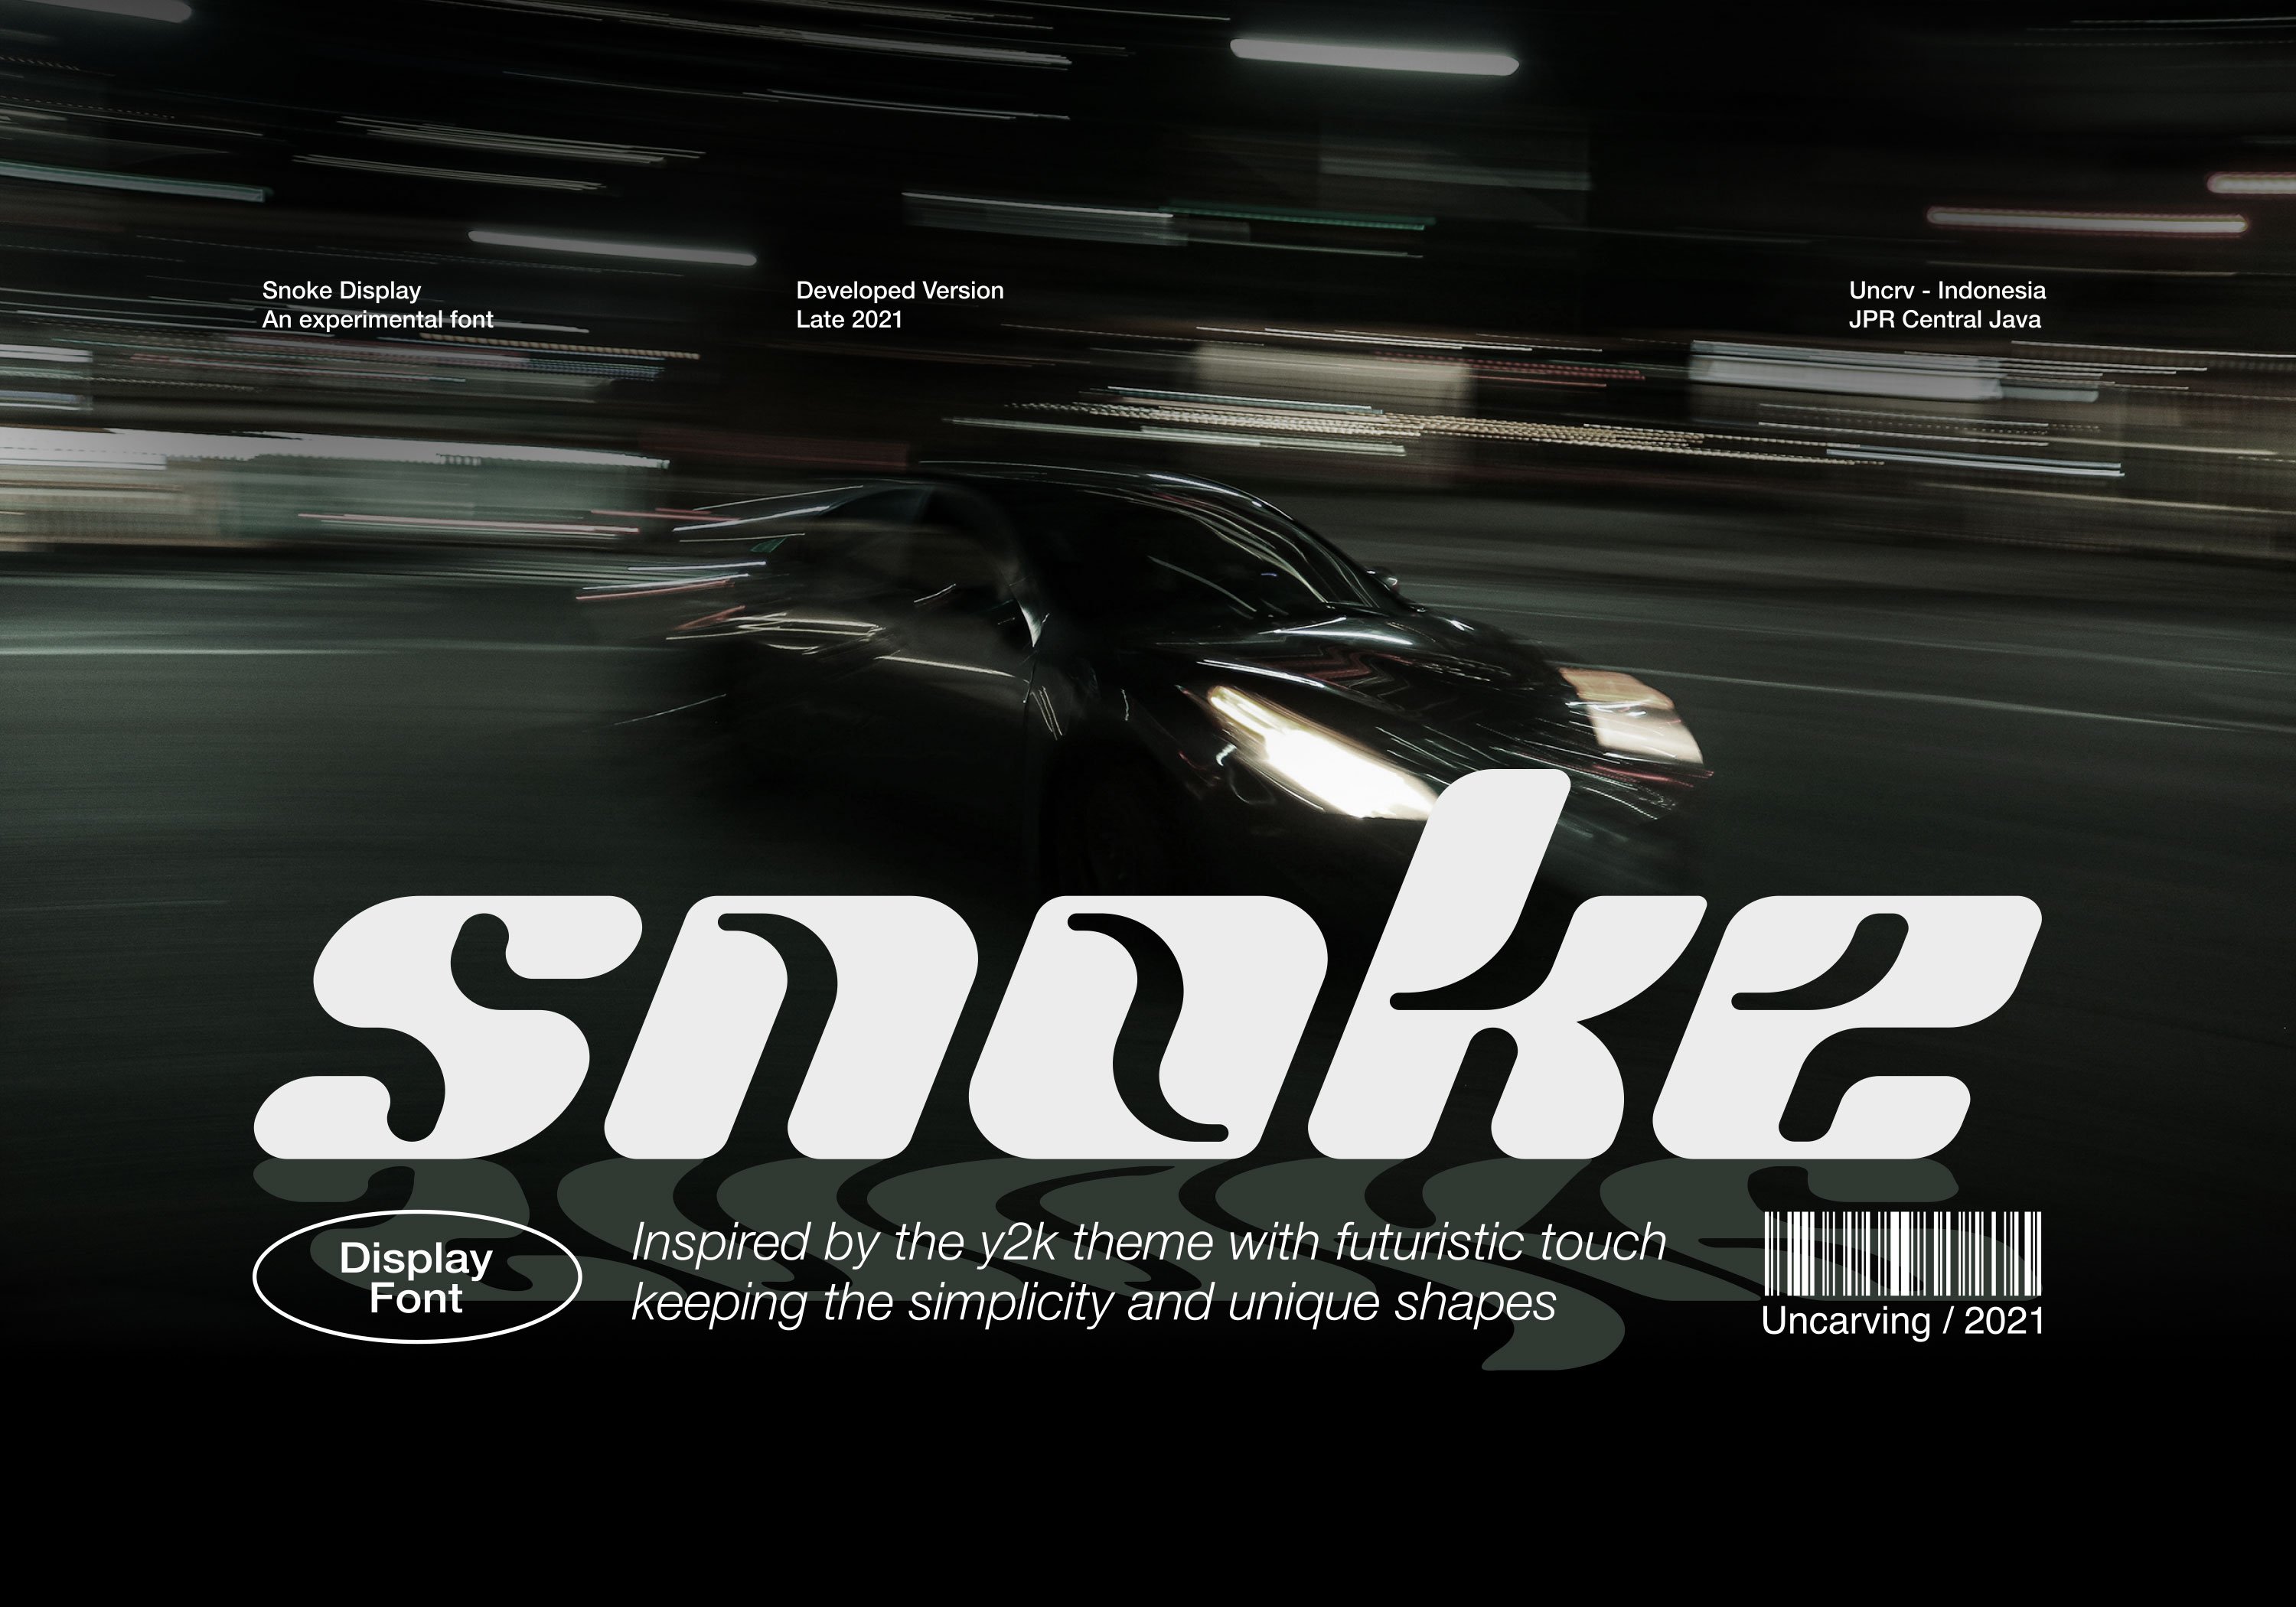 Snoke - Display font cover image.